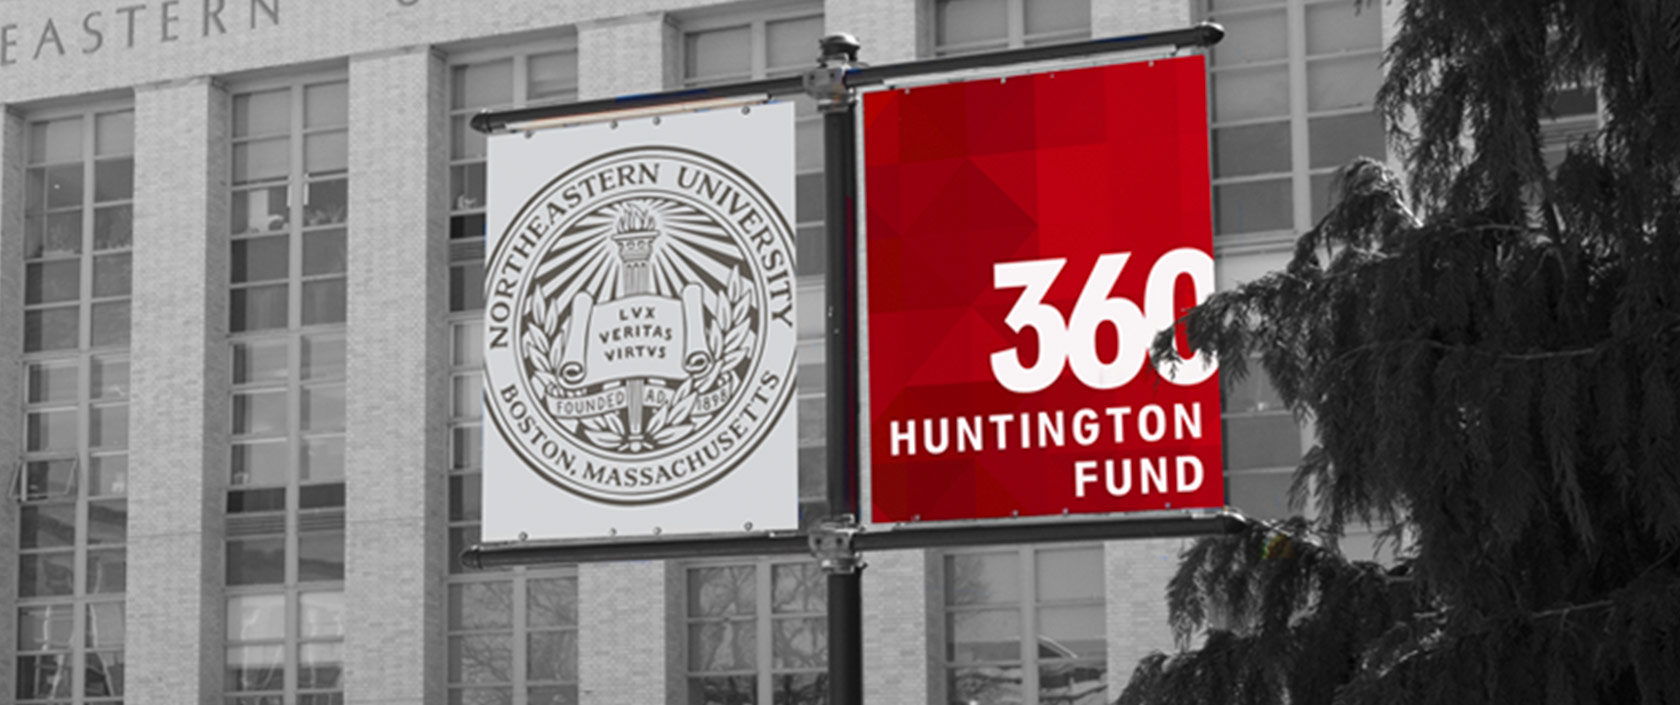 360 Huntington Fund Banner